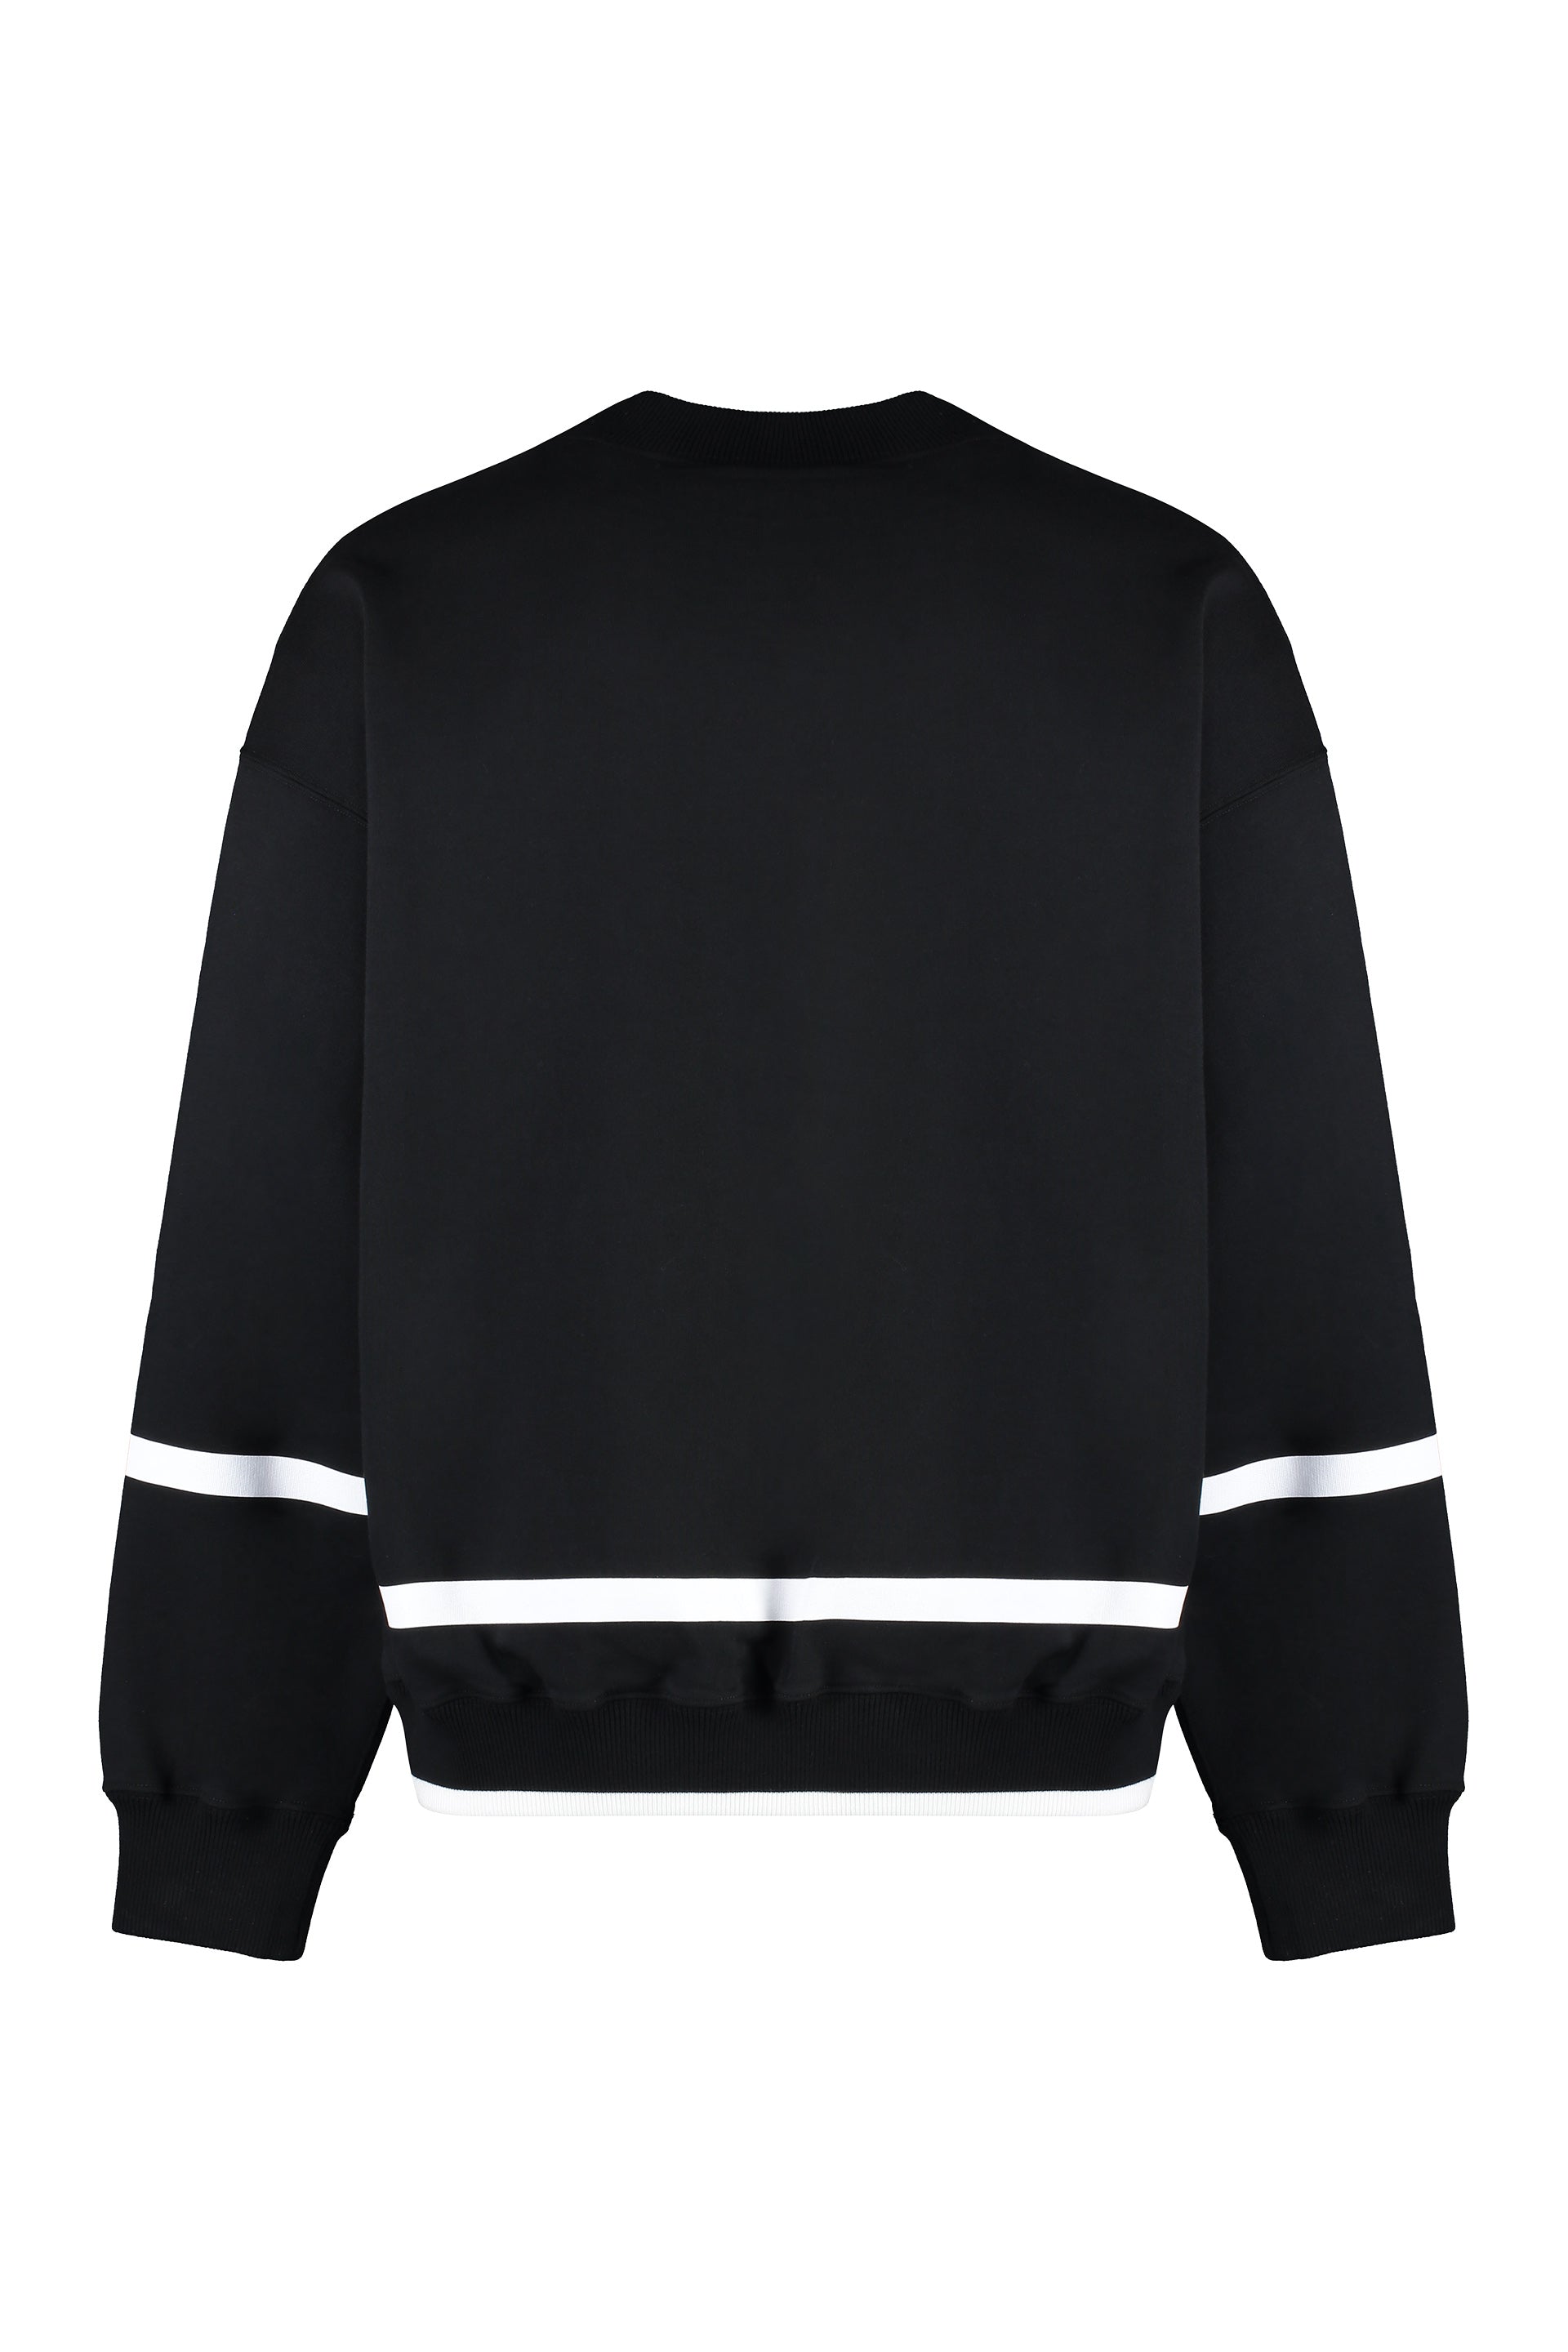 Shop Dolce & Gabbana Men's Black Cotton Crew-neck Sweatshirt